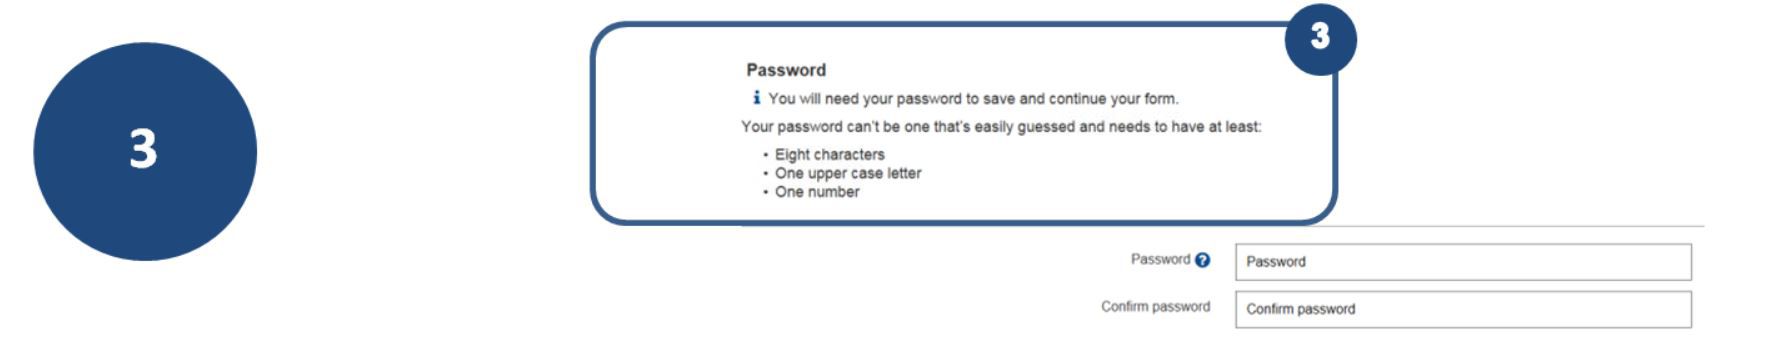 Password rules